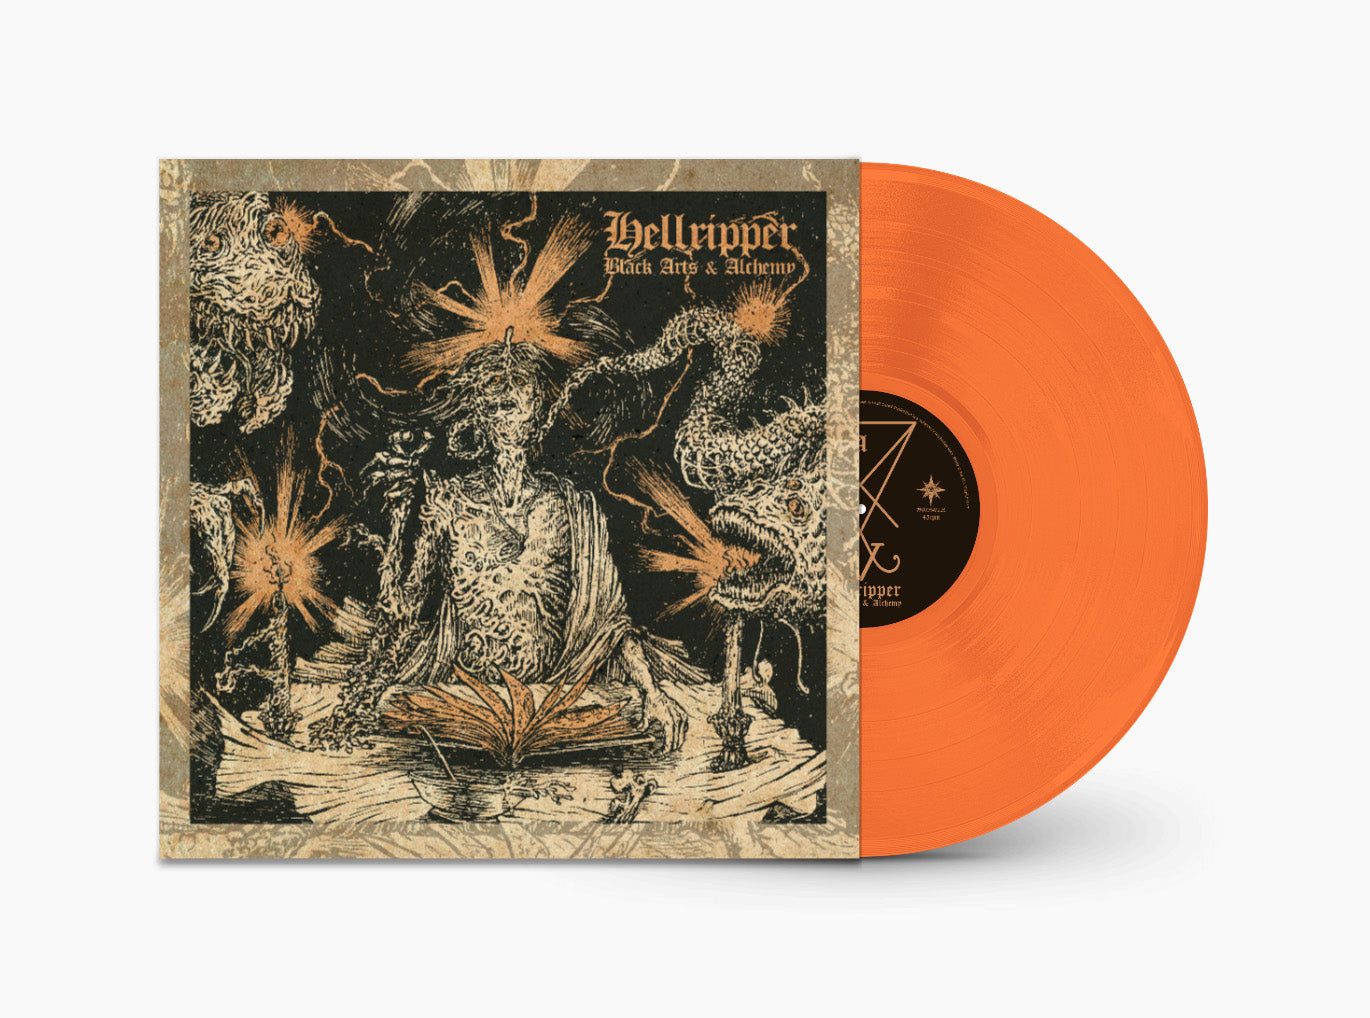 Hellripper "Black Arts & Alchemy" Orange Vinyl